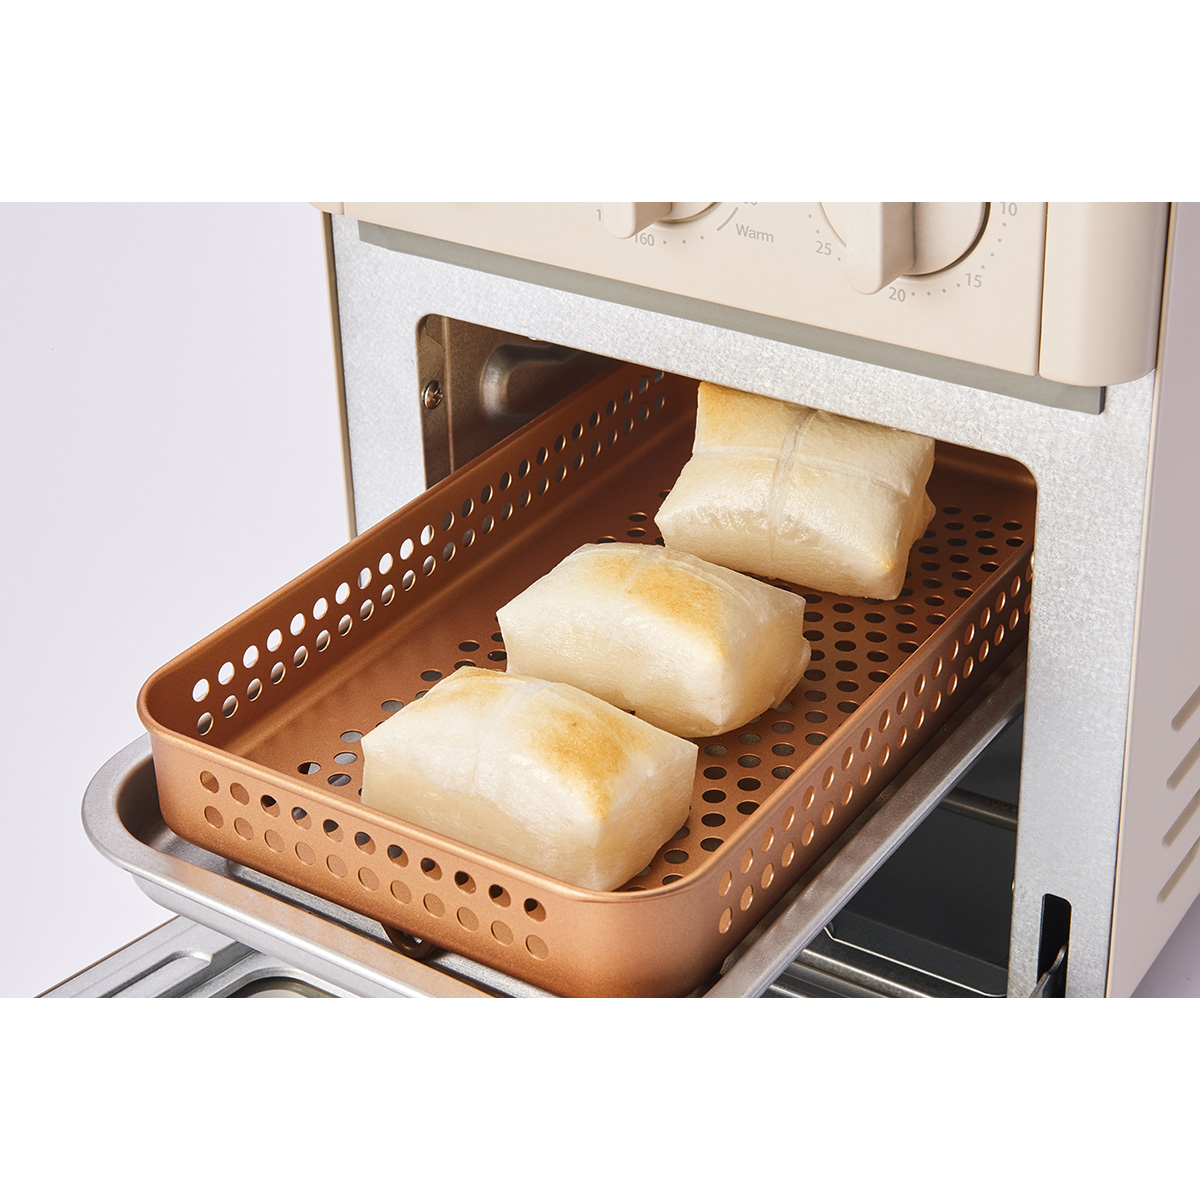 Air Oven Toaster エアーオーブントースター グレー